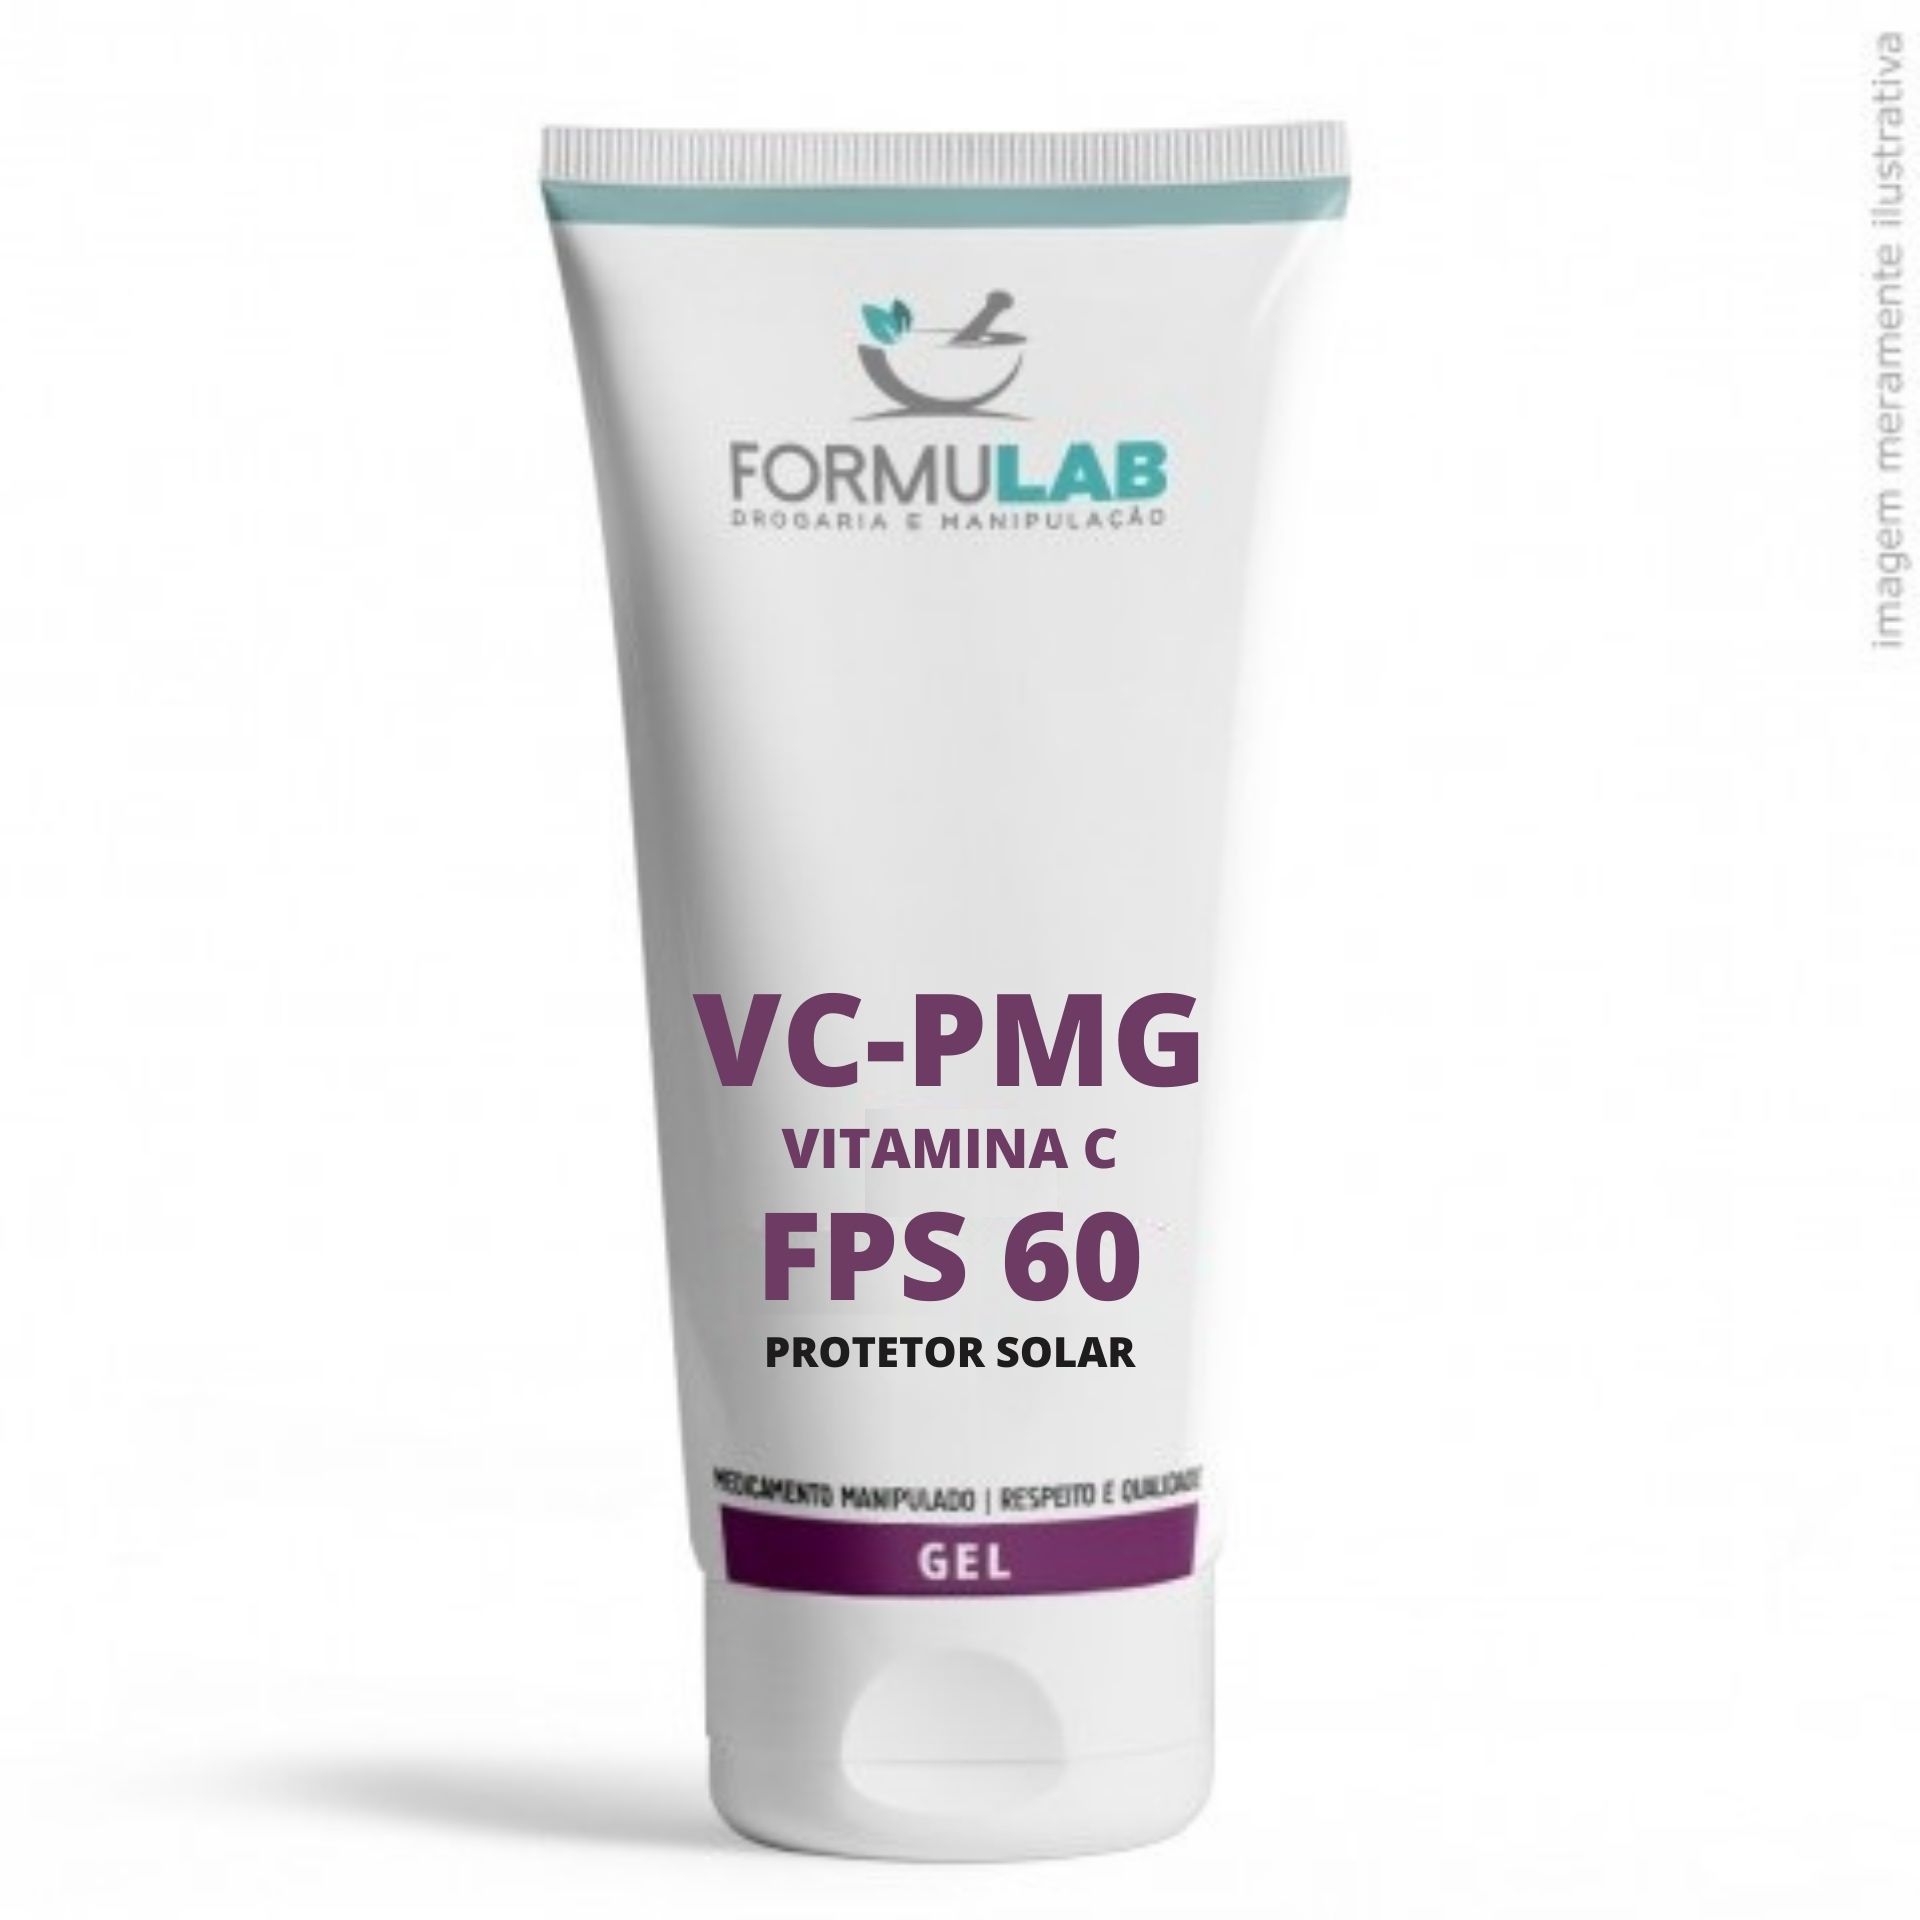 Vitamina C 2% (VC-PMG) Protetor Solar FPS 60 Toque Seco - 30 gramas